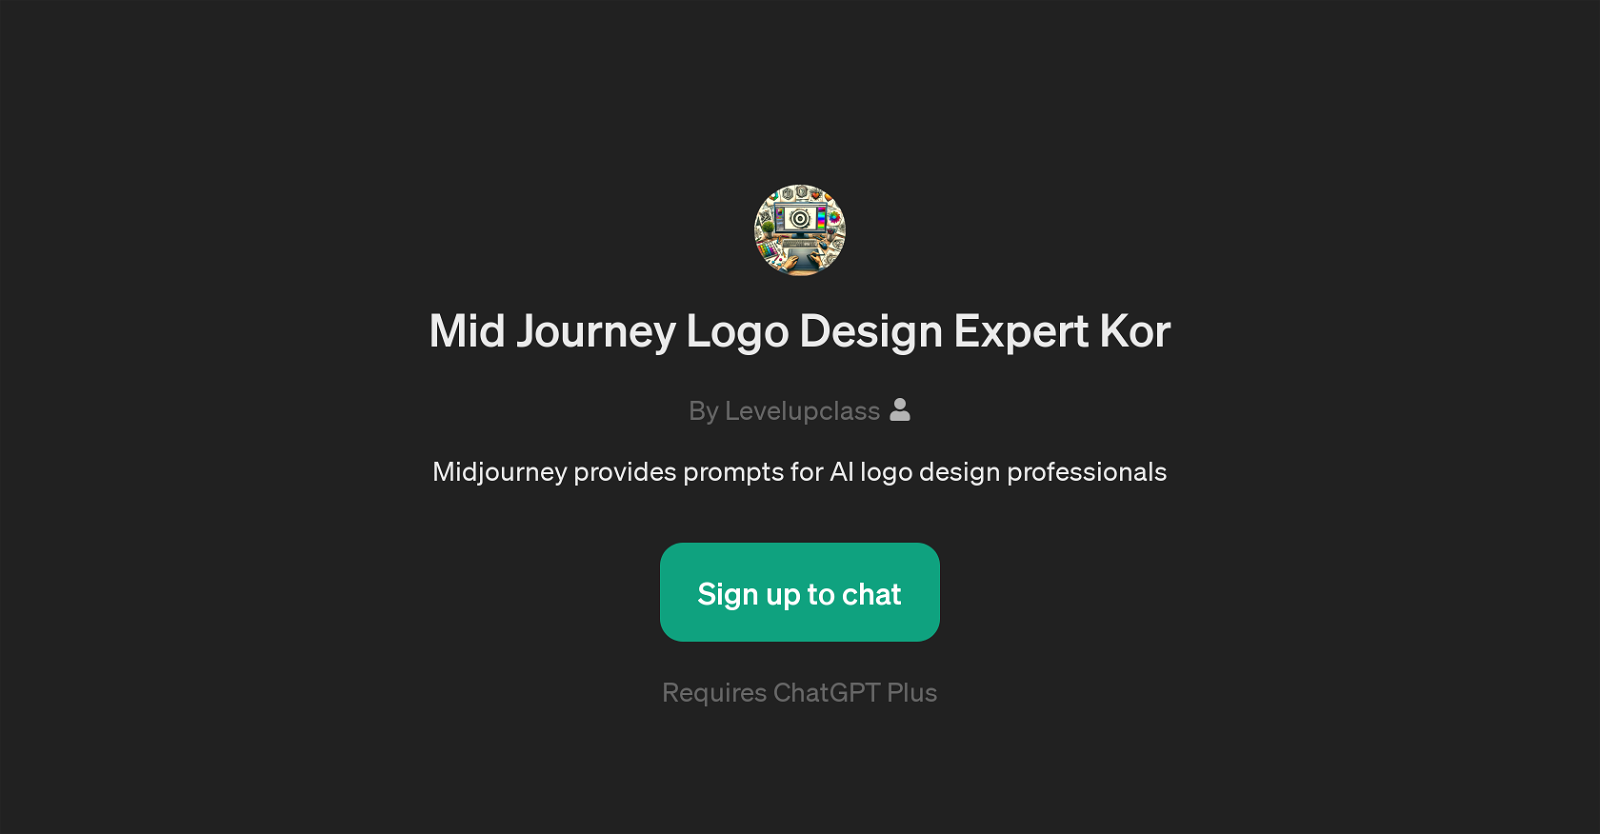 Mid Journey Logo Design Expert Kor website